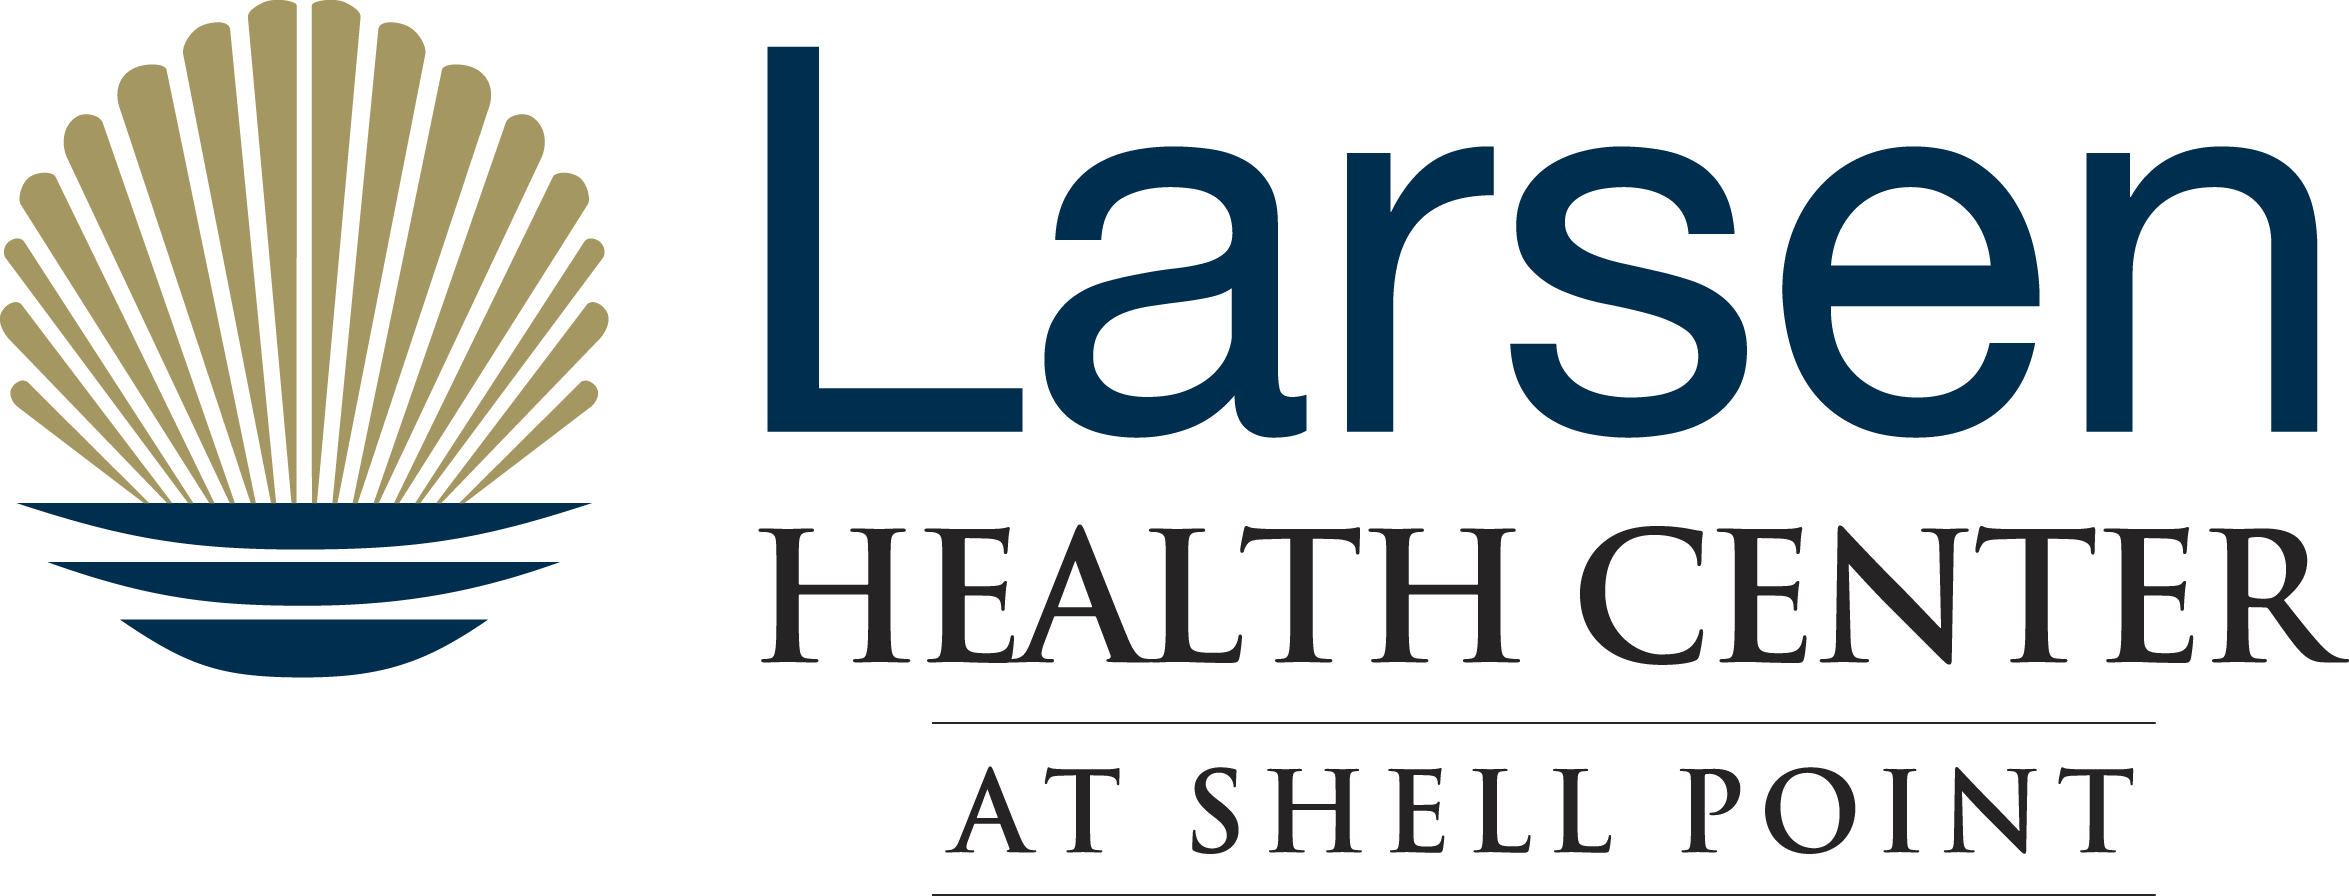 Larsen Health Center at Shell Point logo